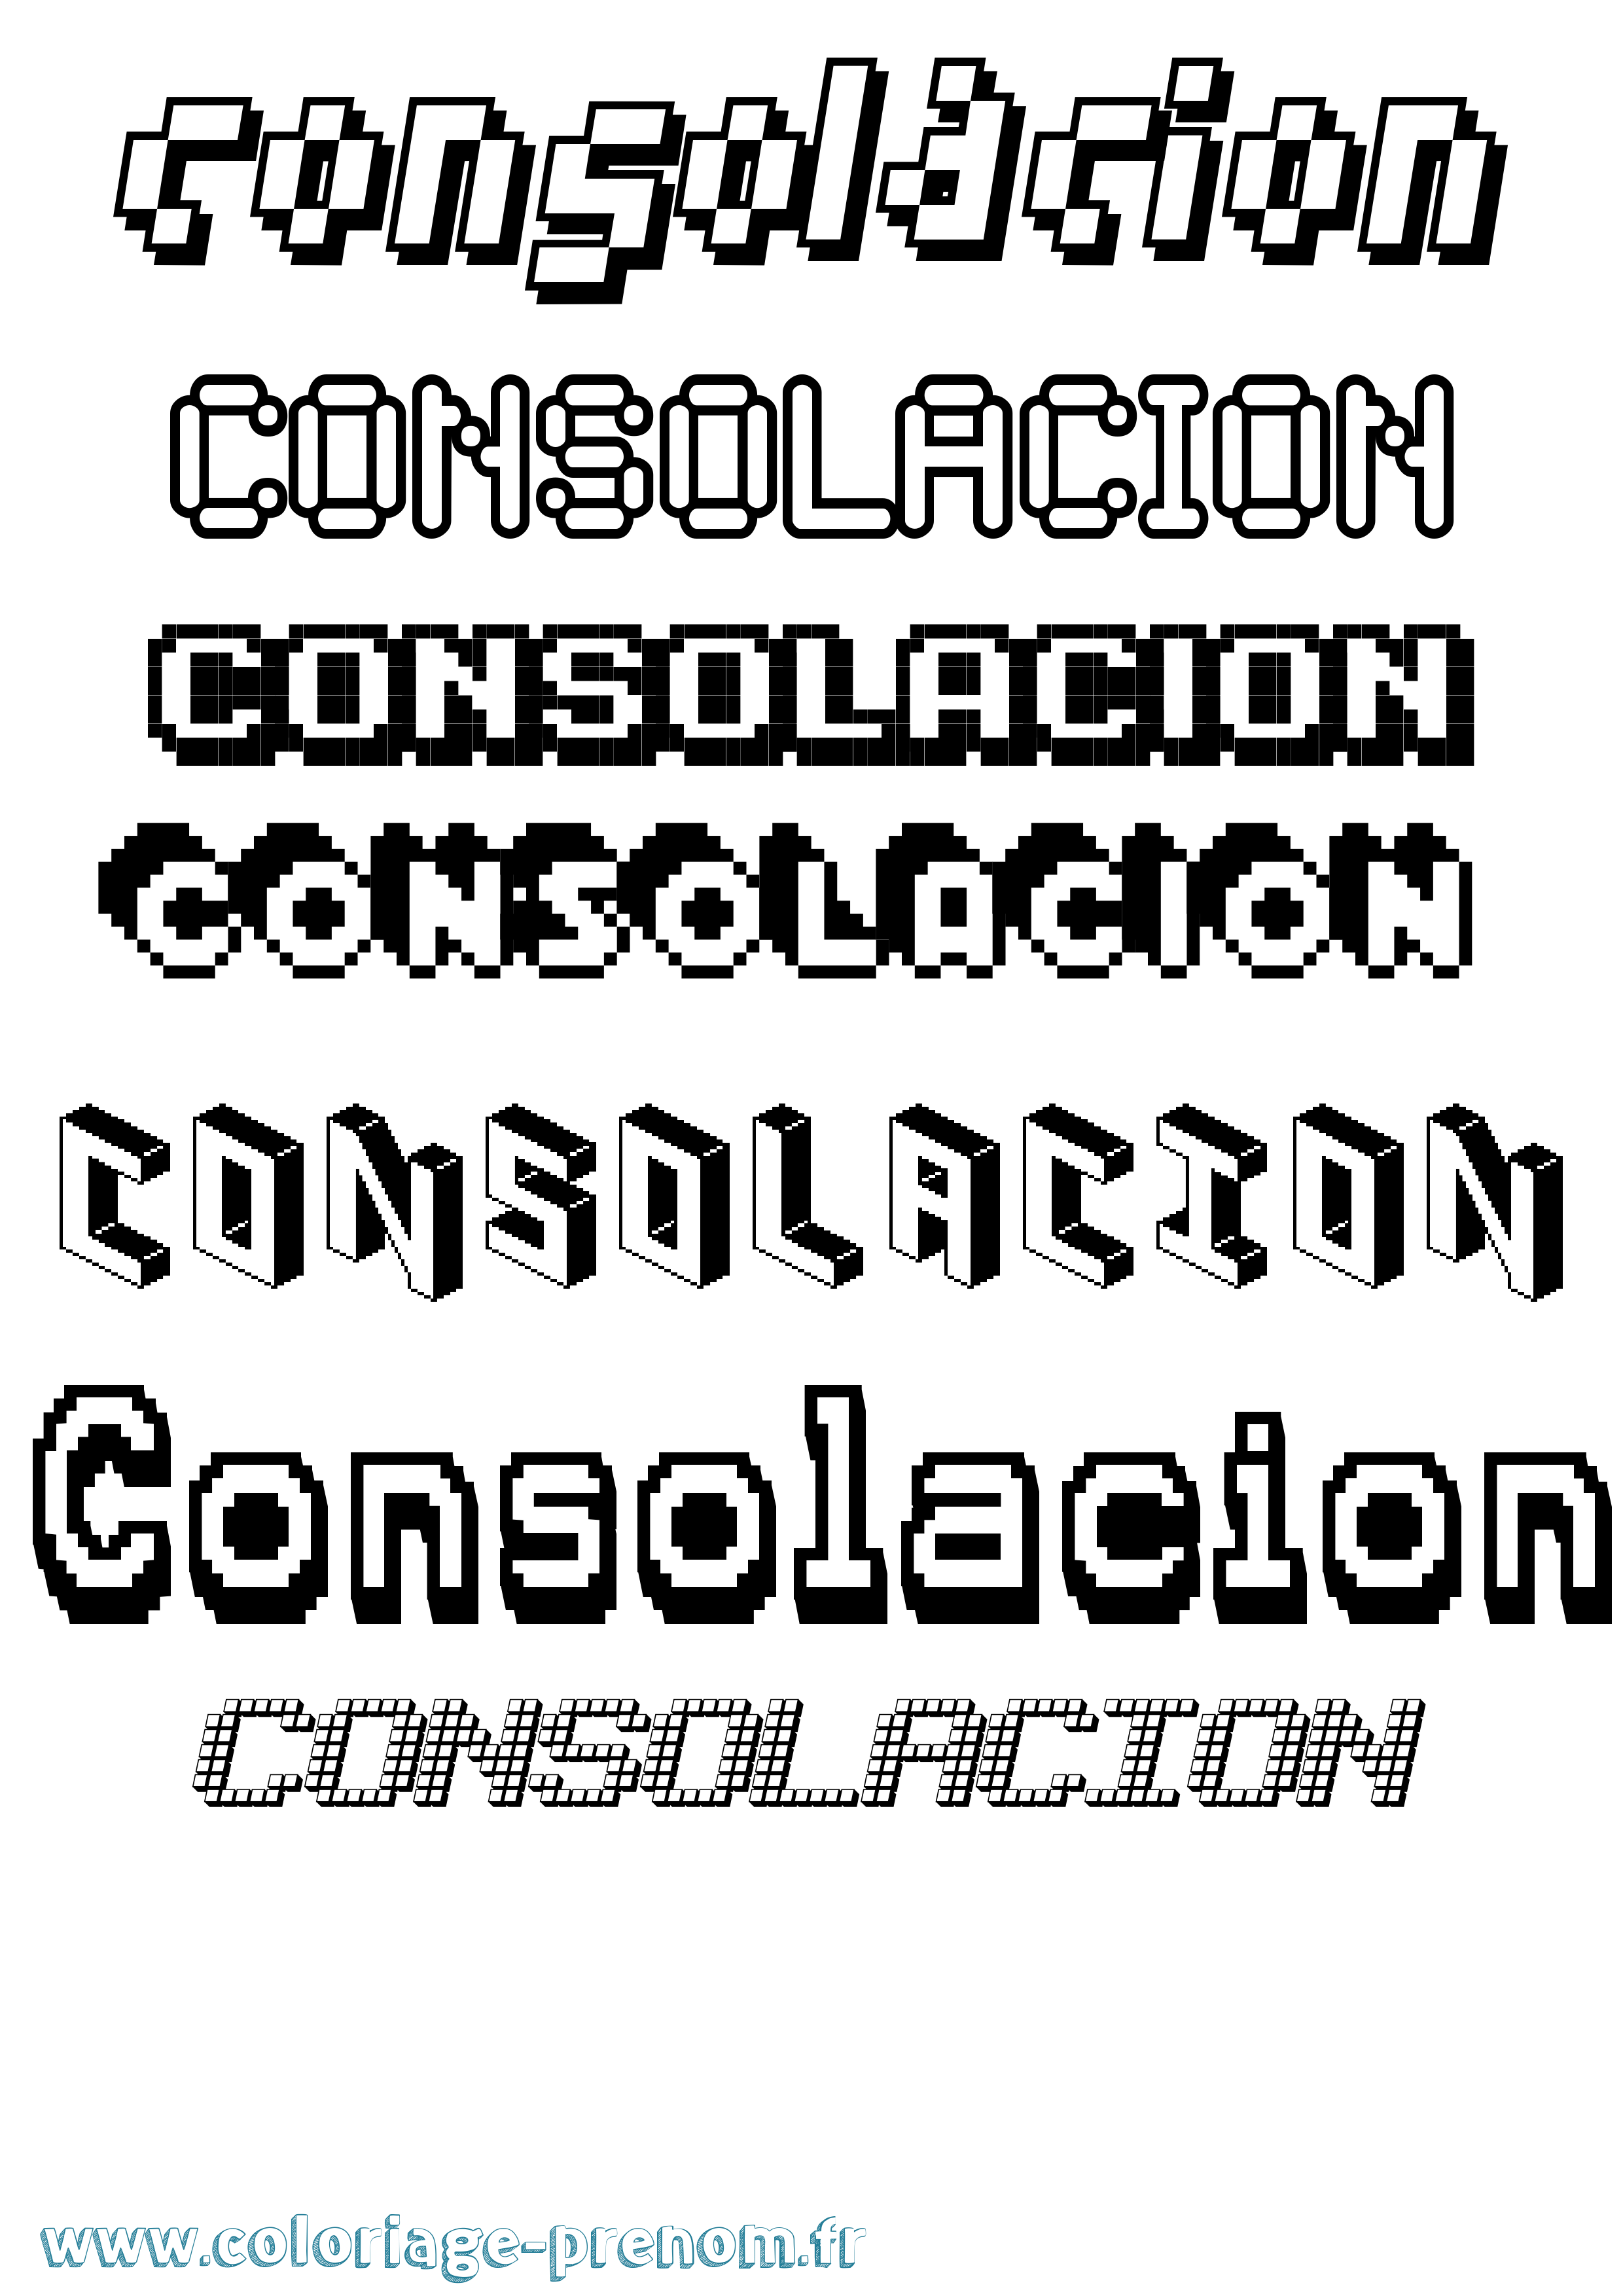 Coloriage prénom Consolacion Pixel